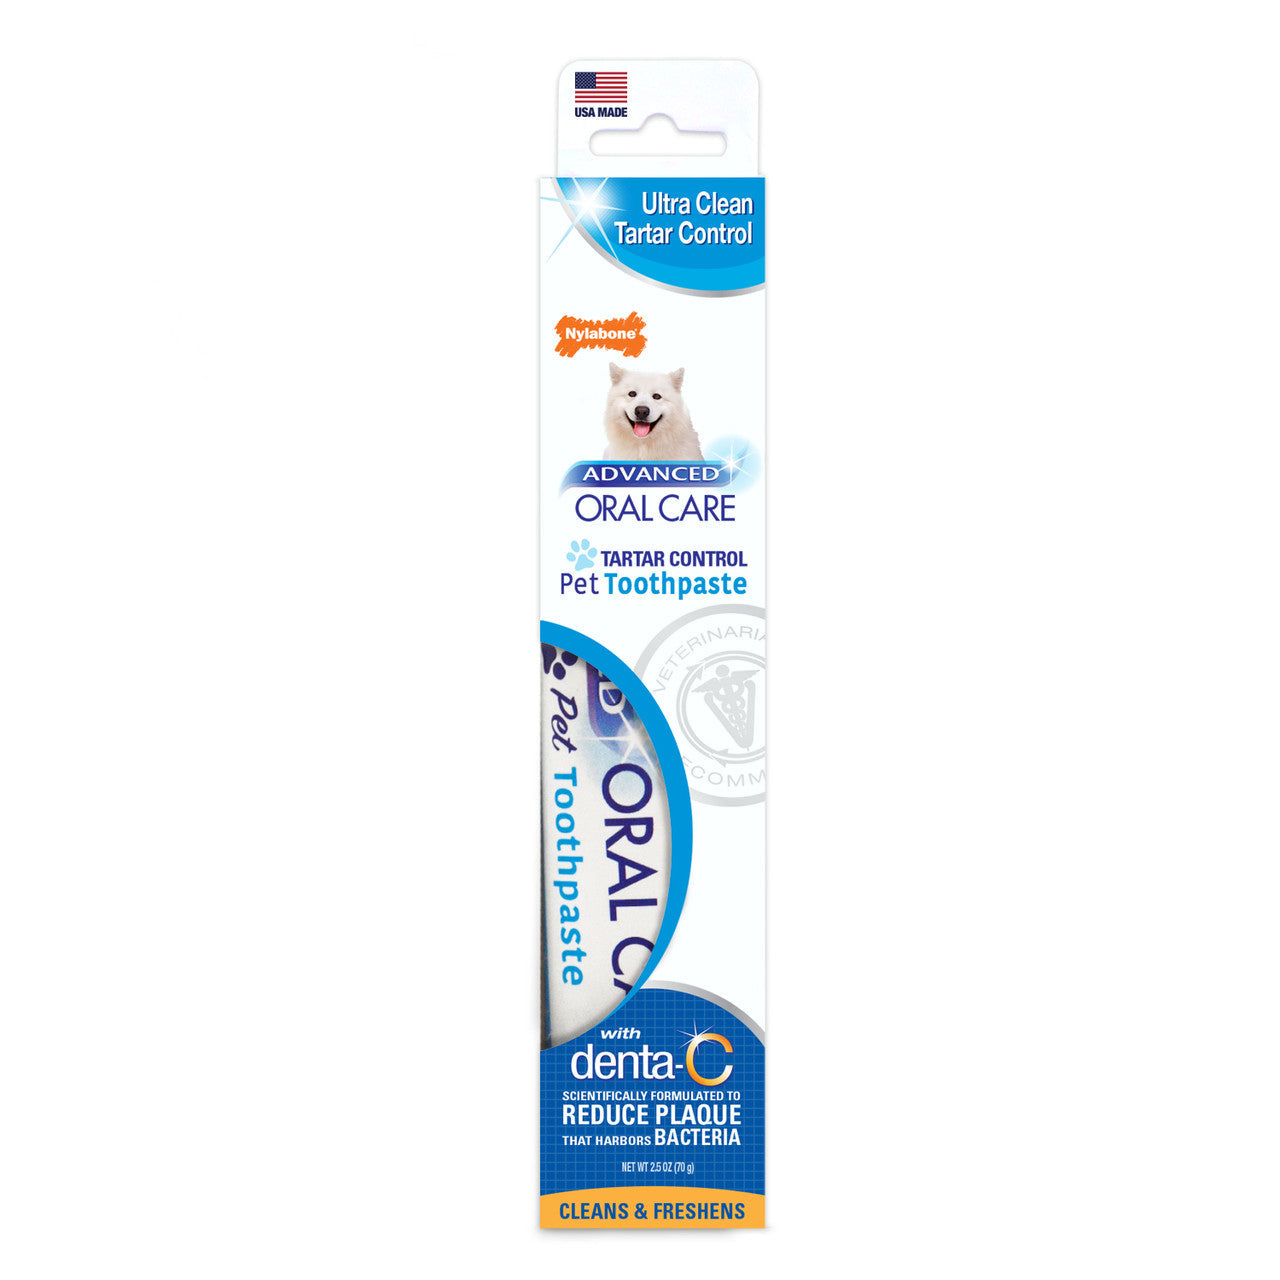 Nylabone Advanced Oral Care Tartar Control Dog Toothpaste Original 2.5 oz. (1 Count)